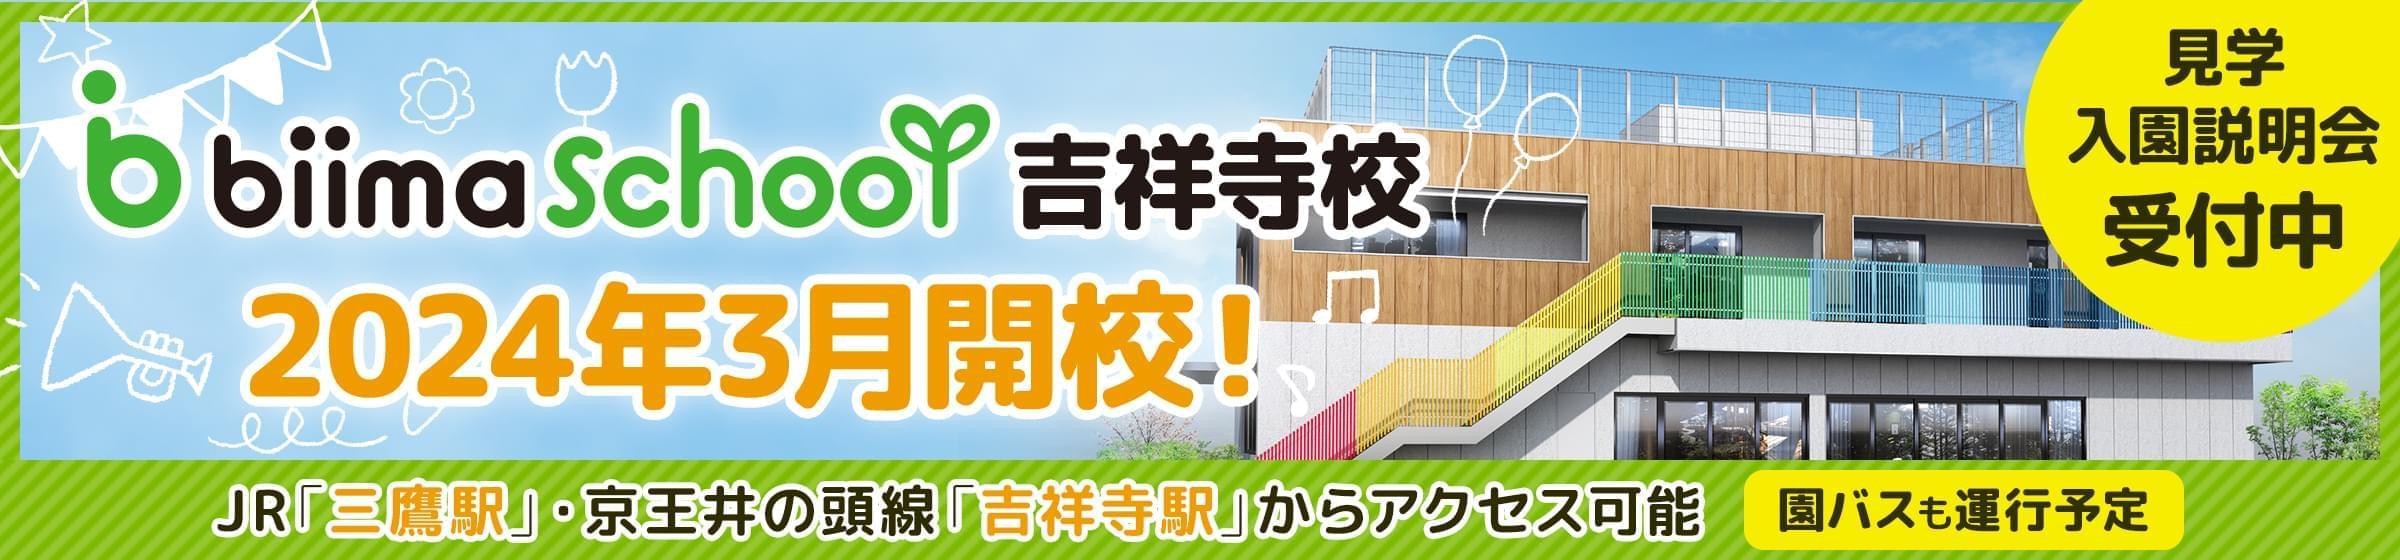 biima school吉祥寺校2024年3月開校！